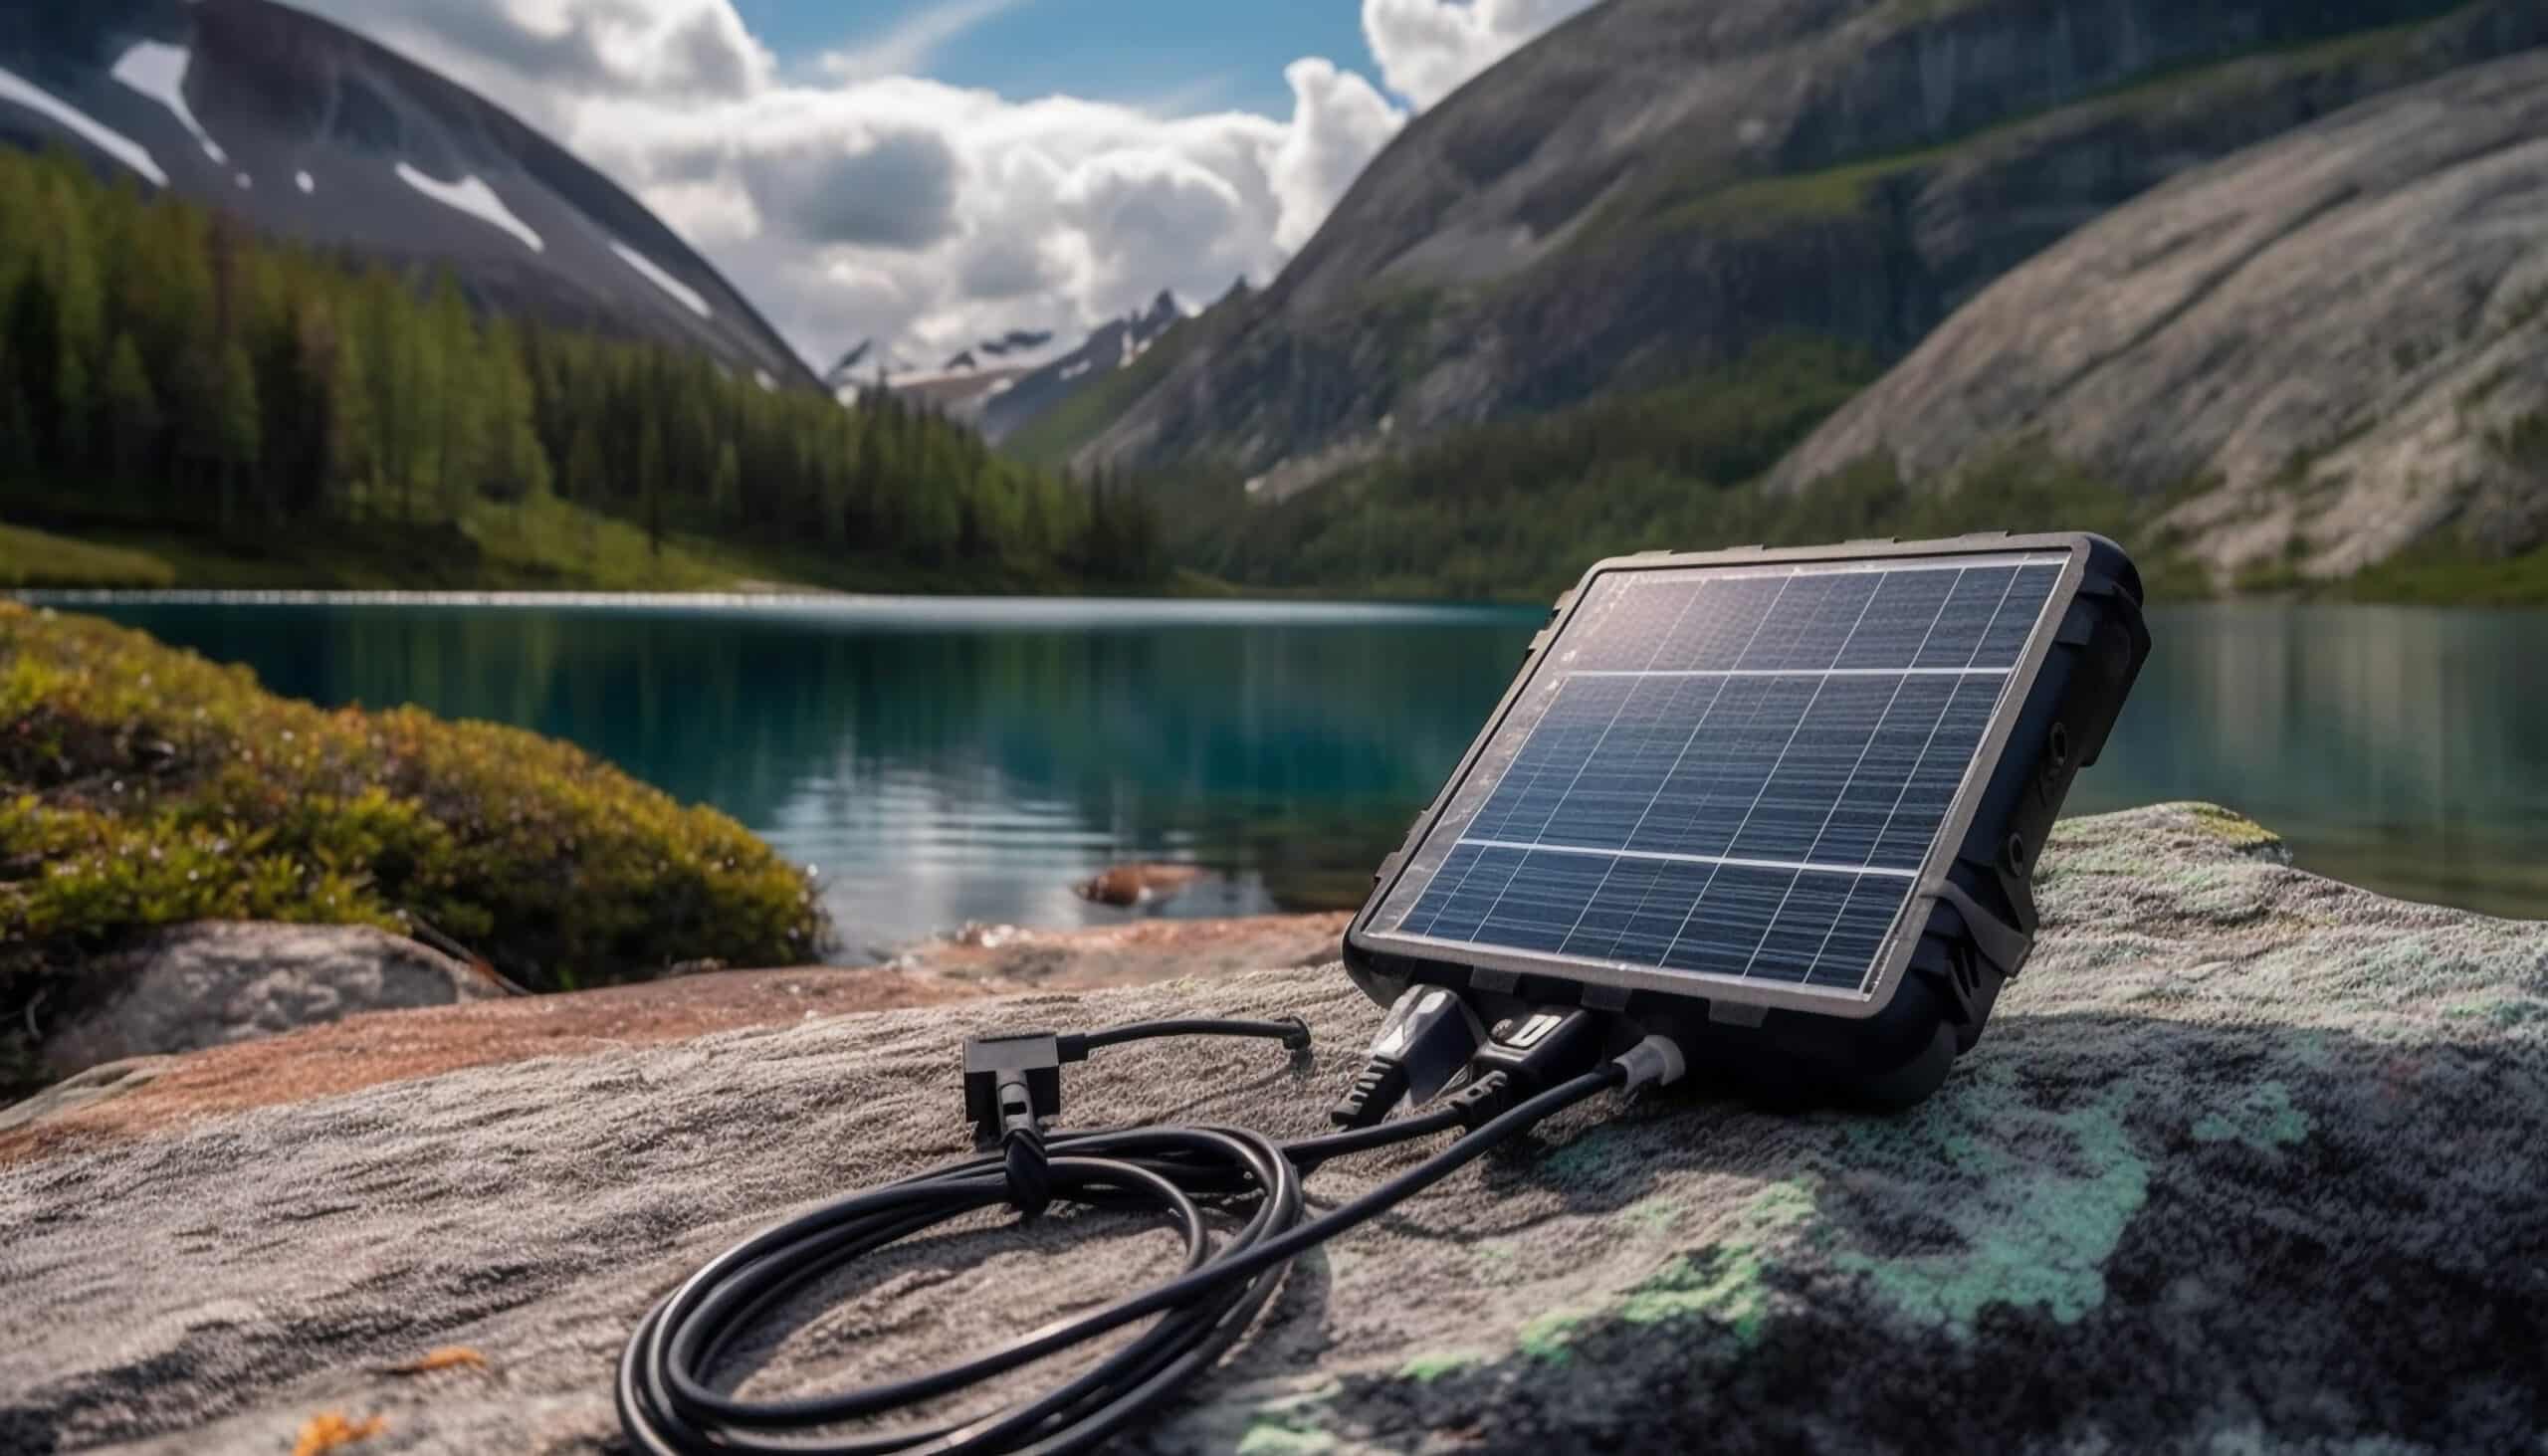 www.appr.com : Portable solar generators: Worth the investment?